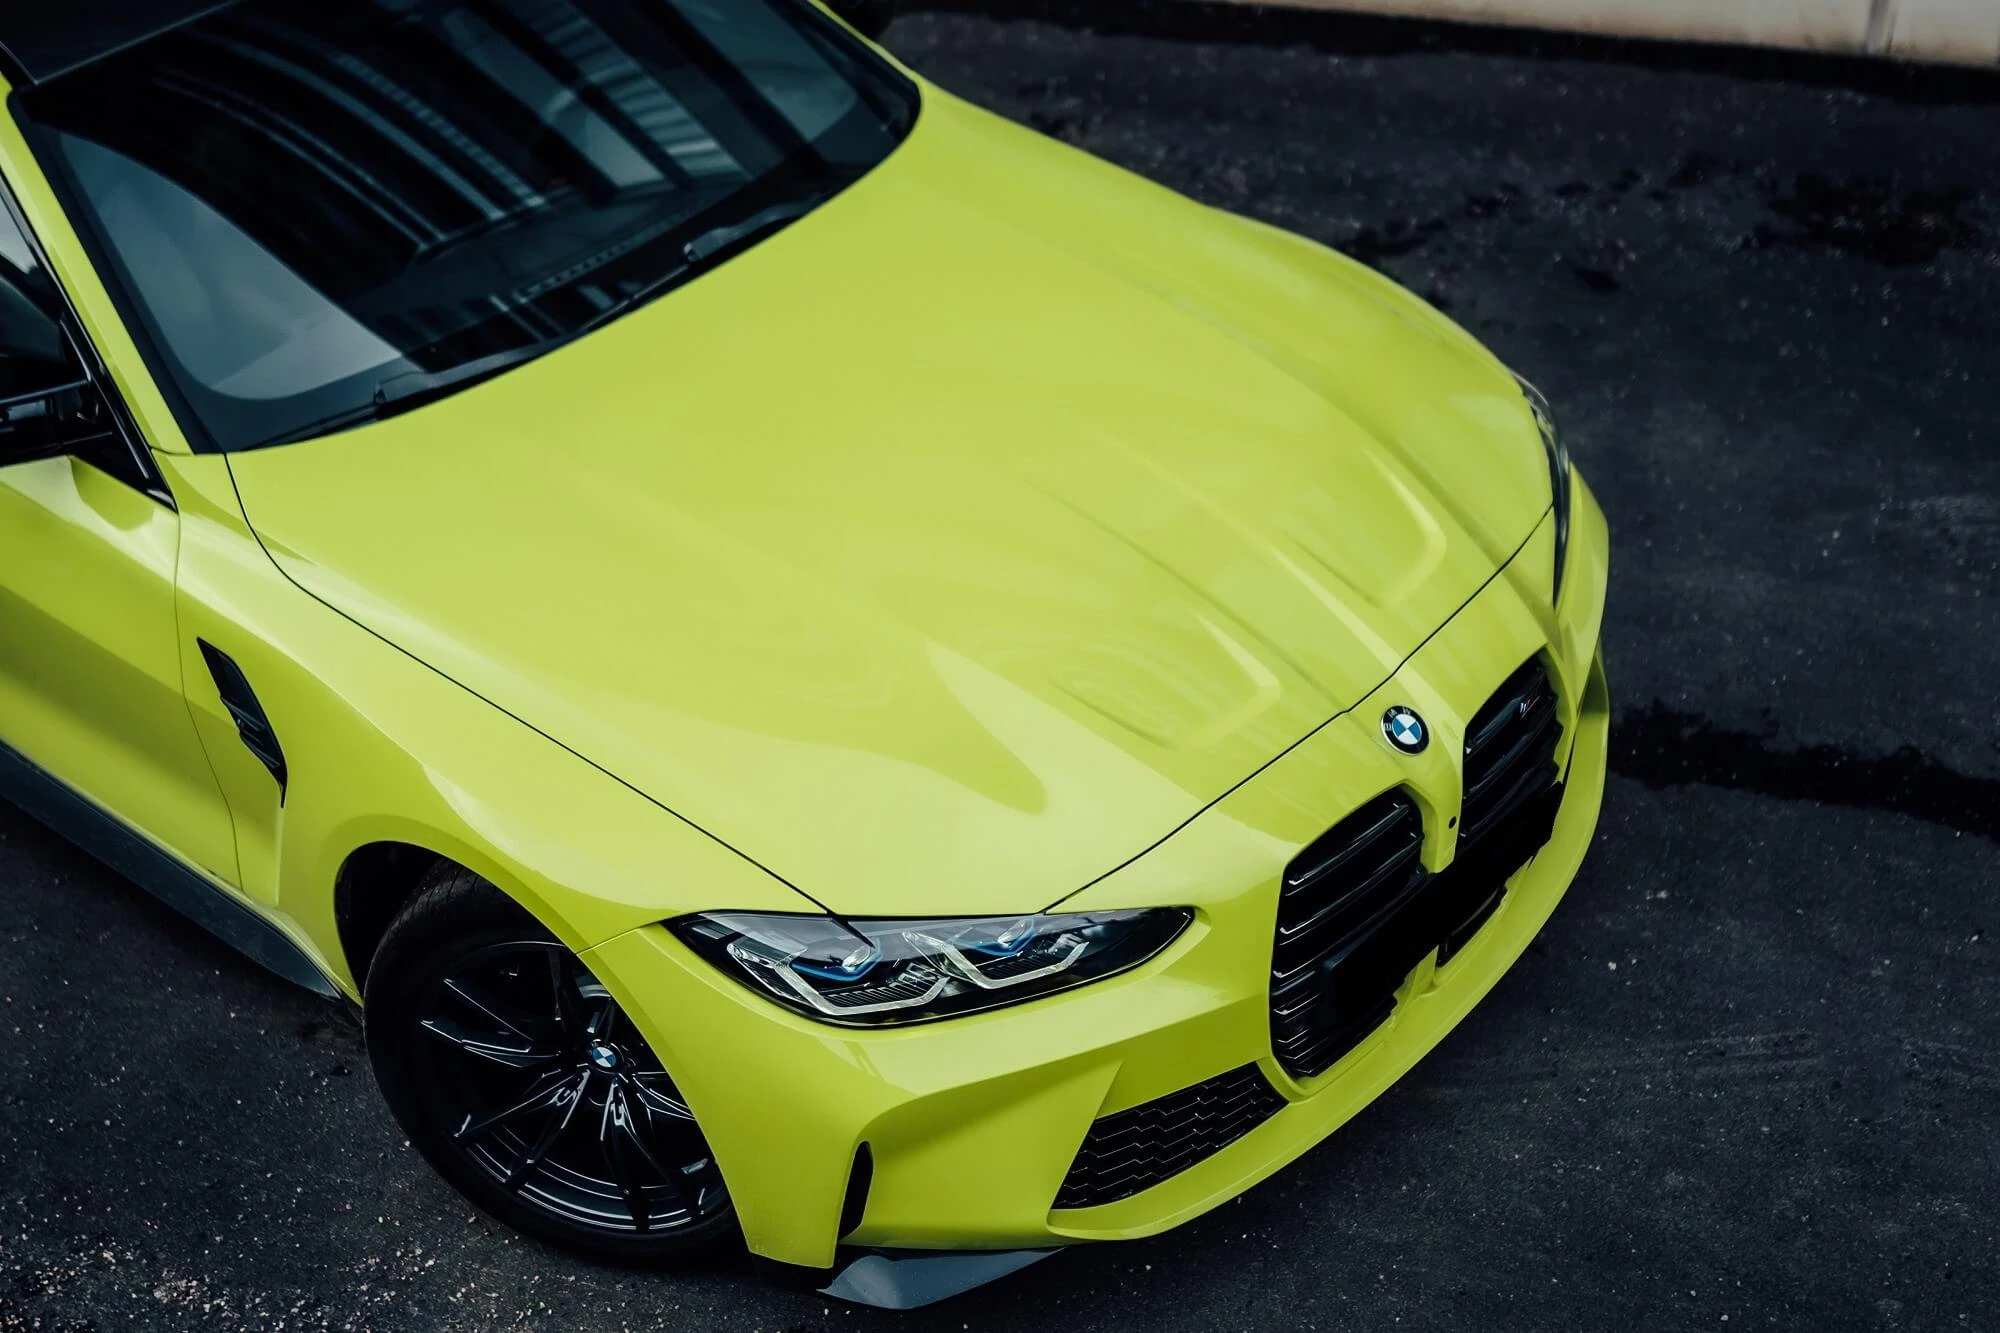 BMW M4 желтый